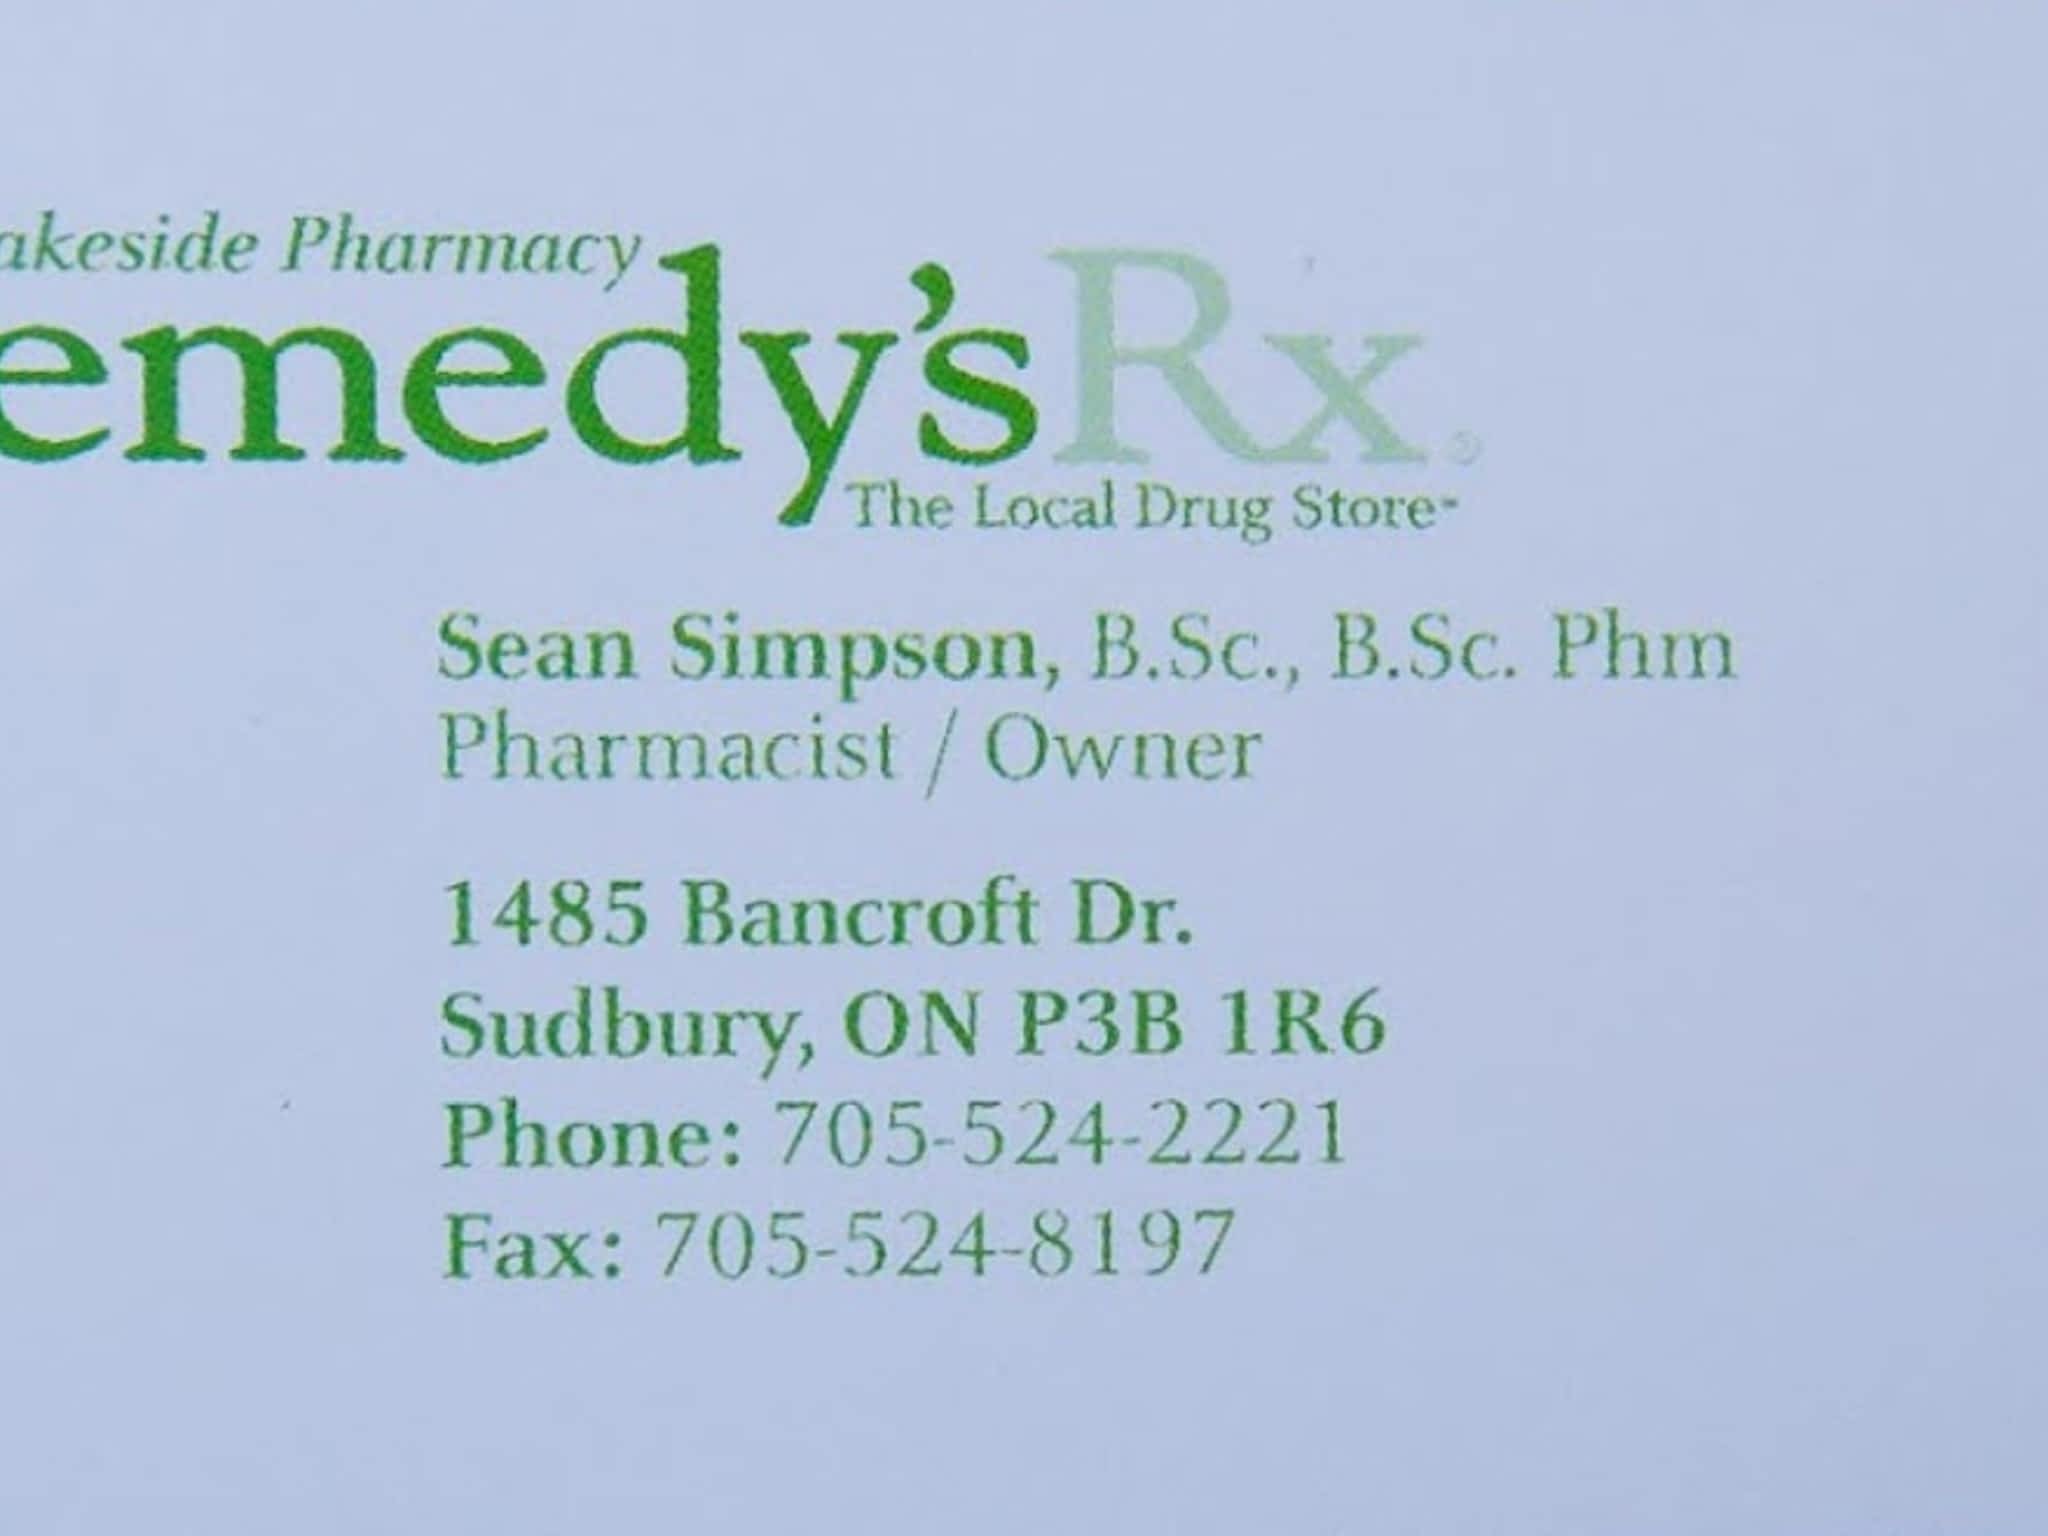 photo Lakeside Pharmacy